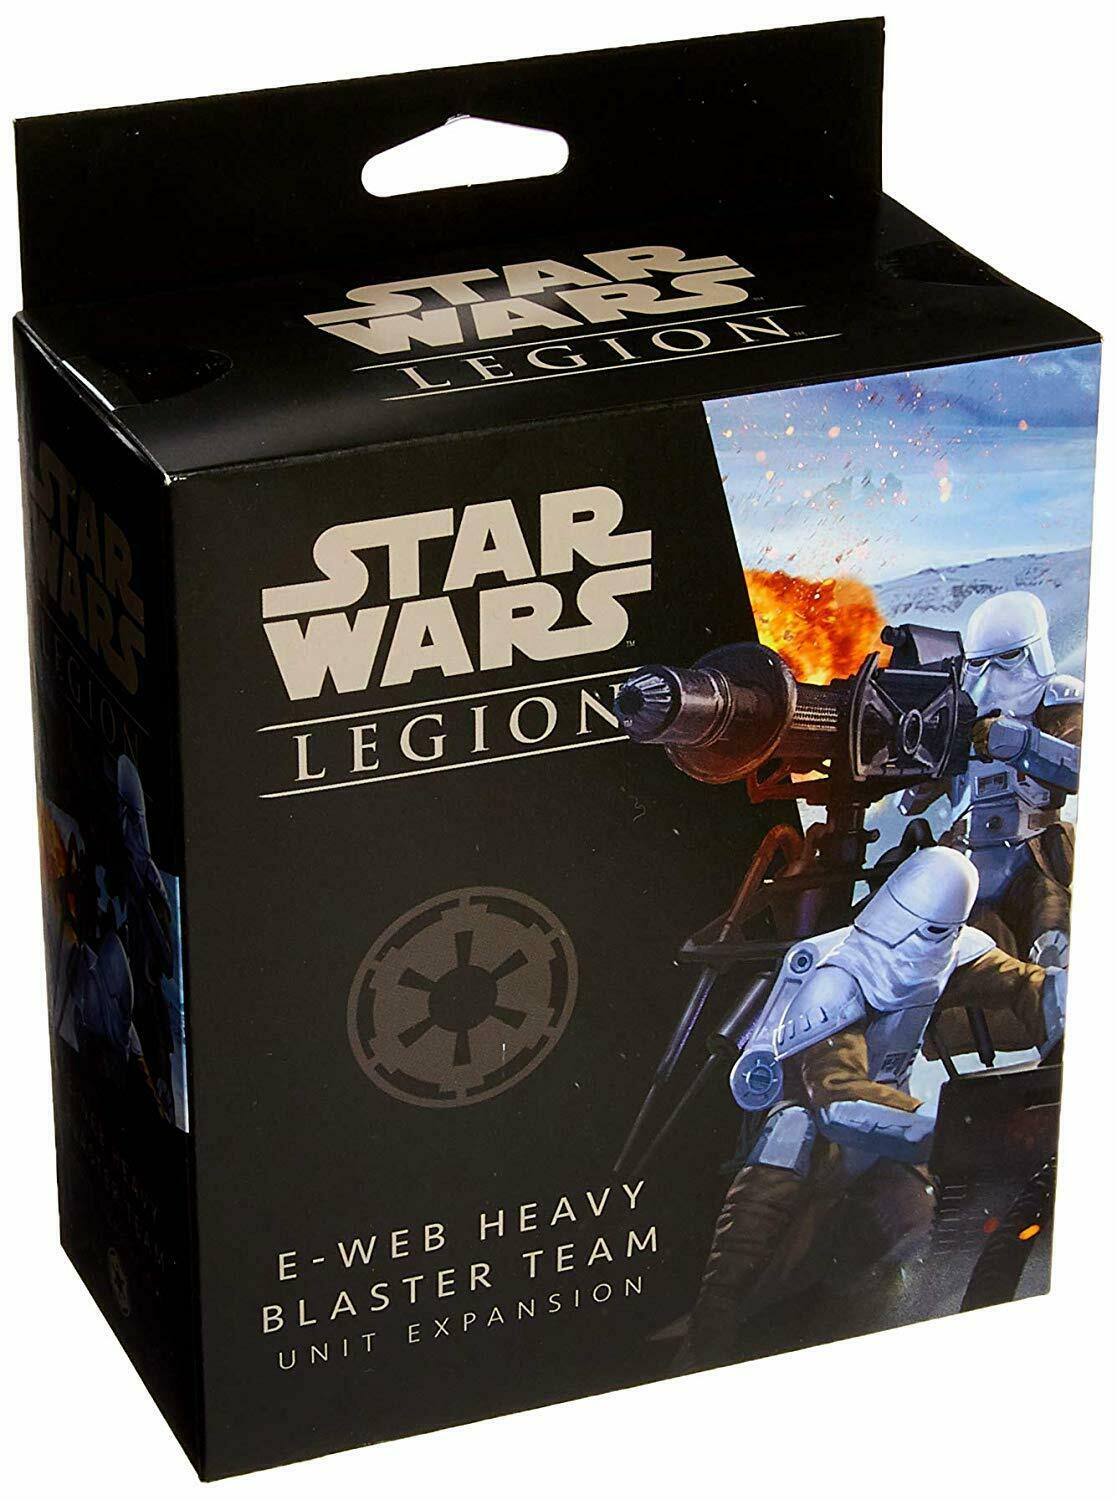 E-web Heavy Blaster Team Unit Expansion Star Wars: Legion Ffg Nib